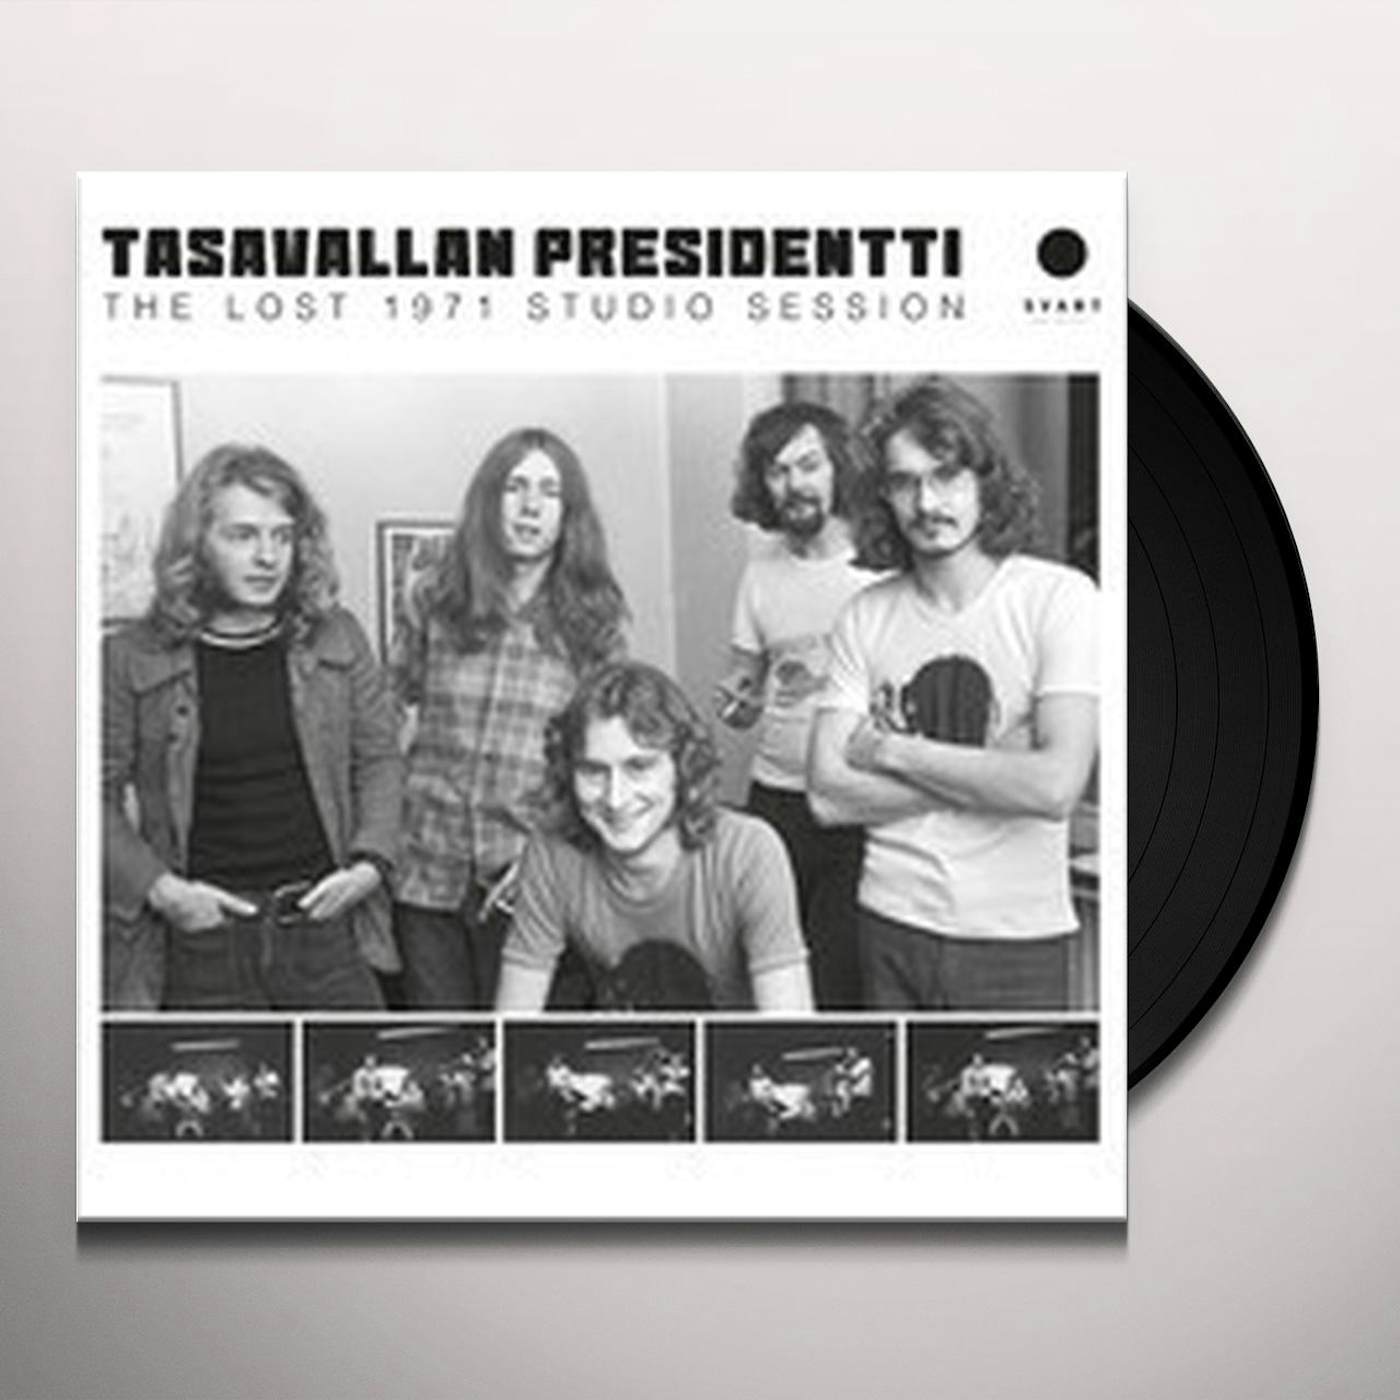 Tasavallan Presidentti LOST 1971 STUDIO SESSION Vinyl Record